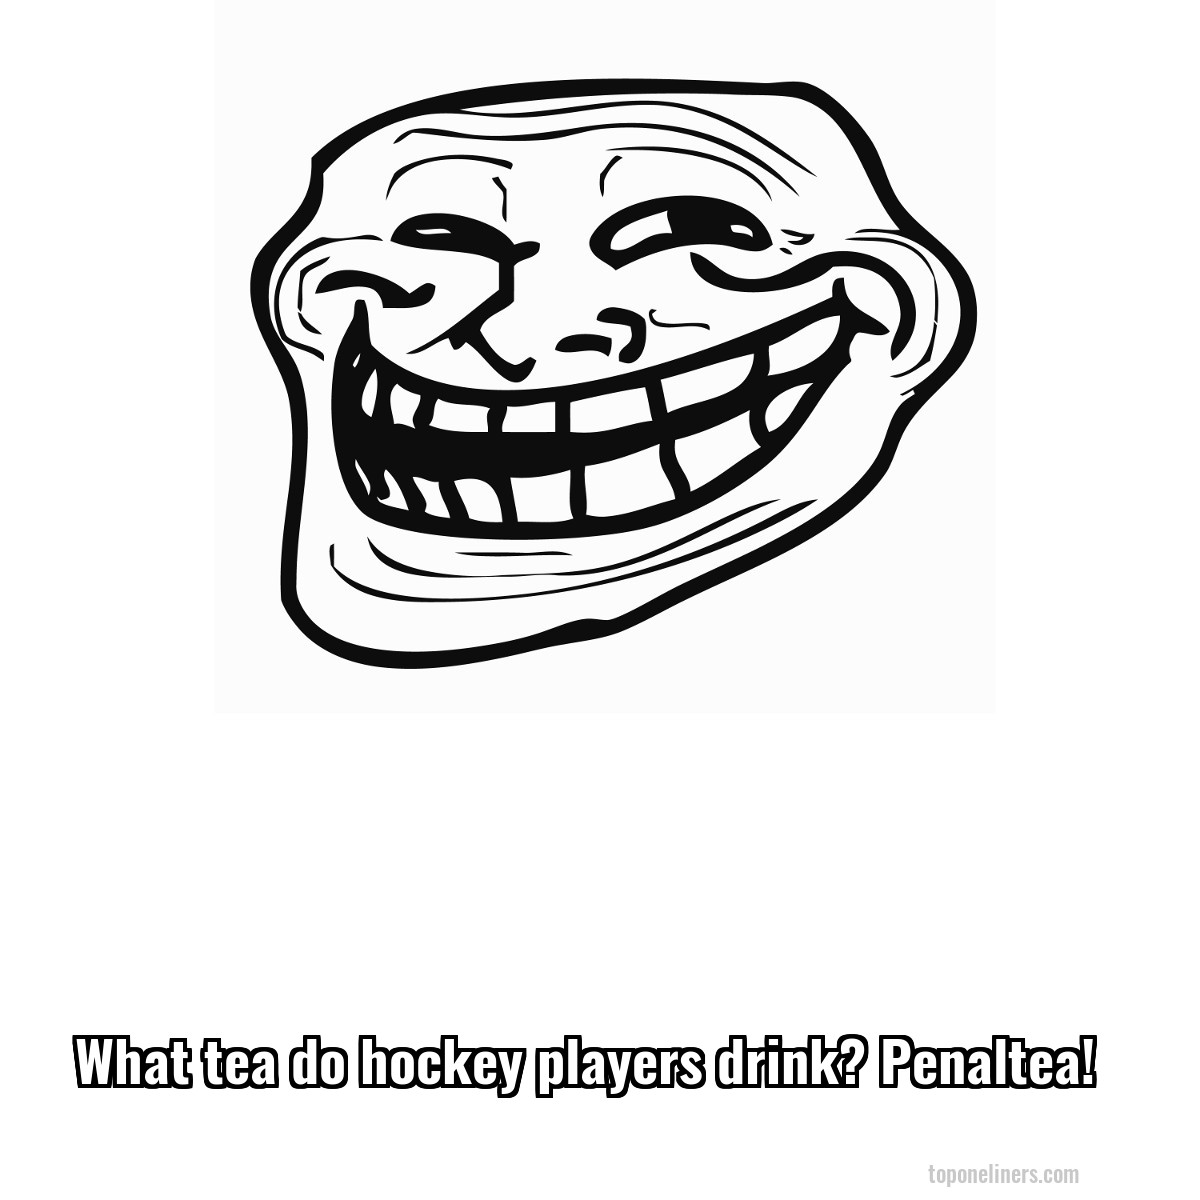 What tea do hockey players drink? Penaltea!
